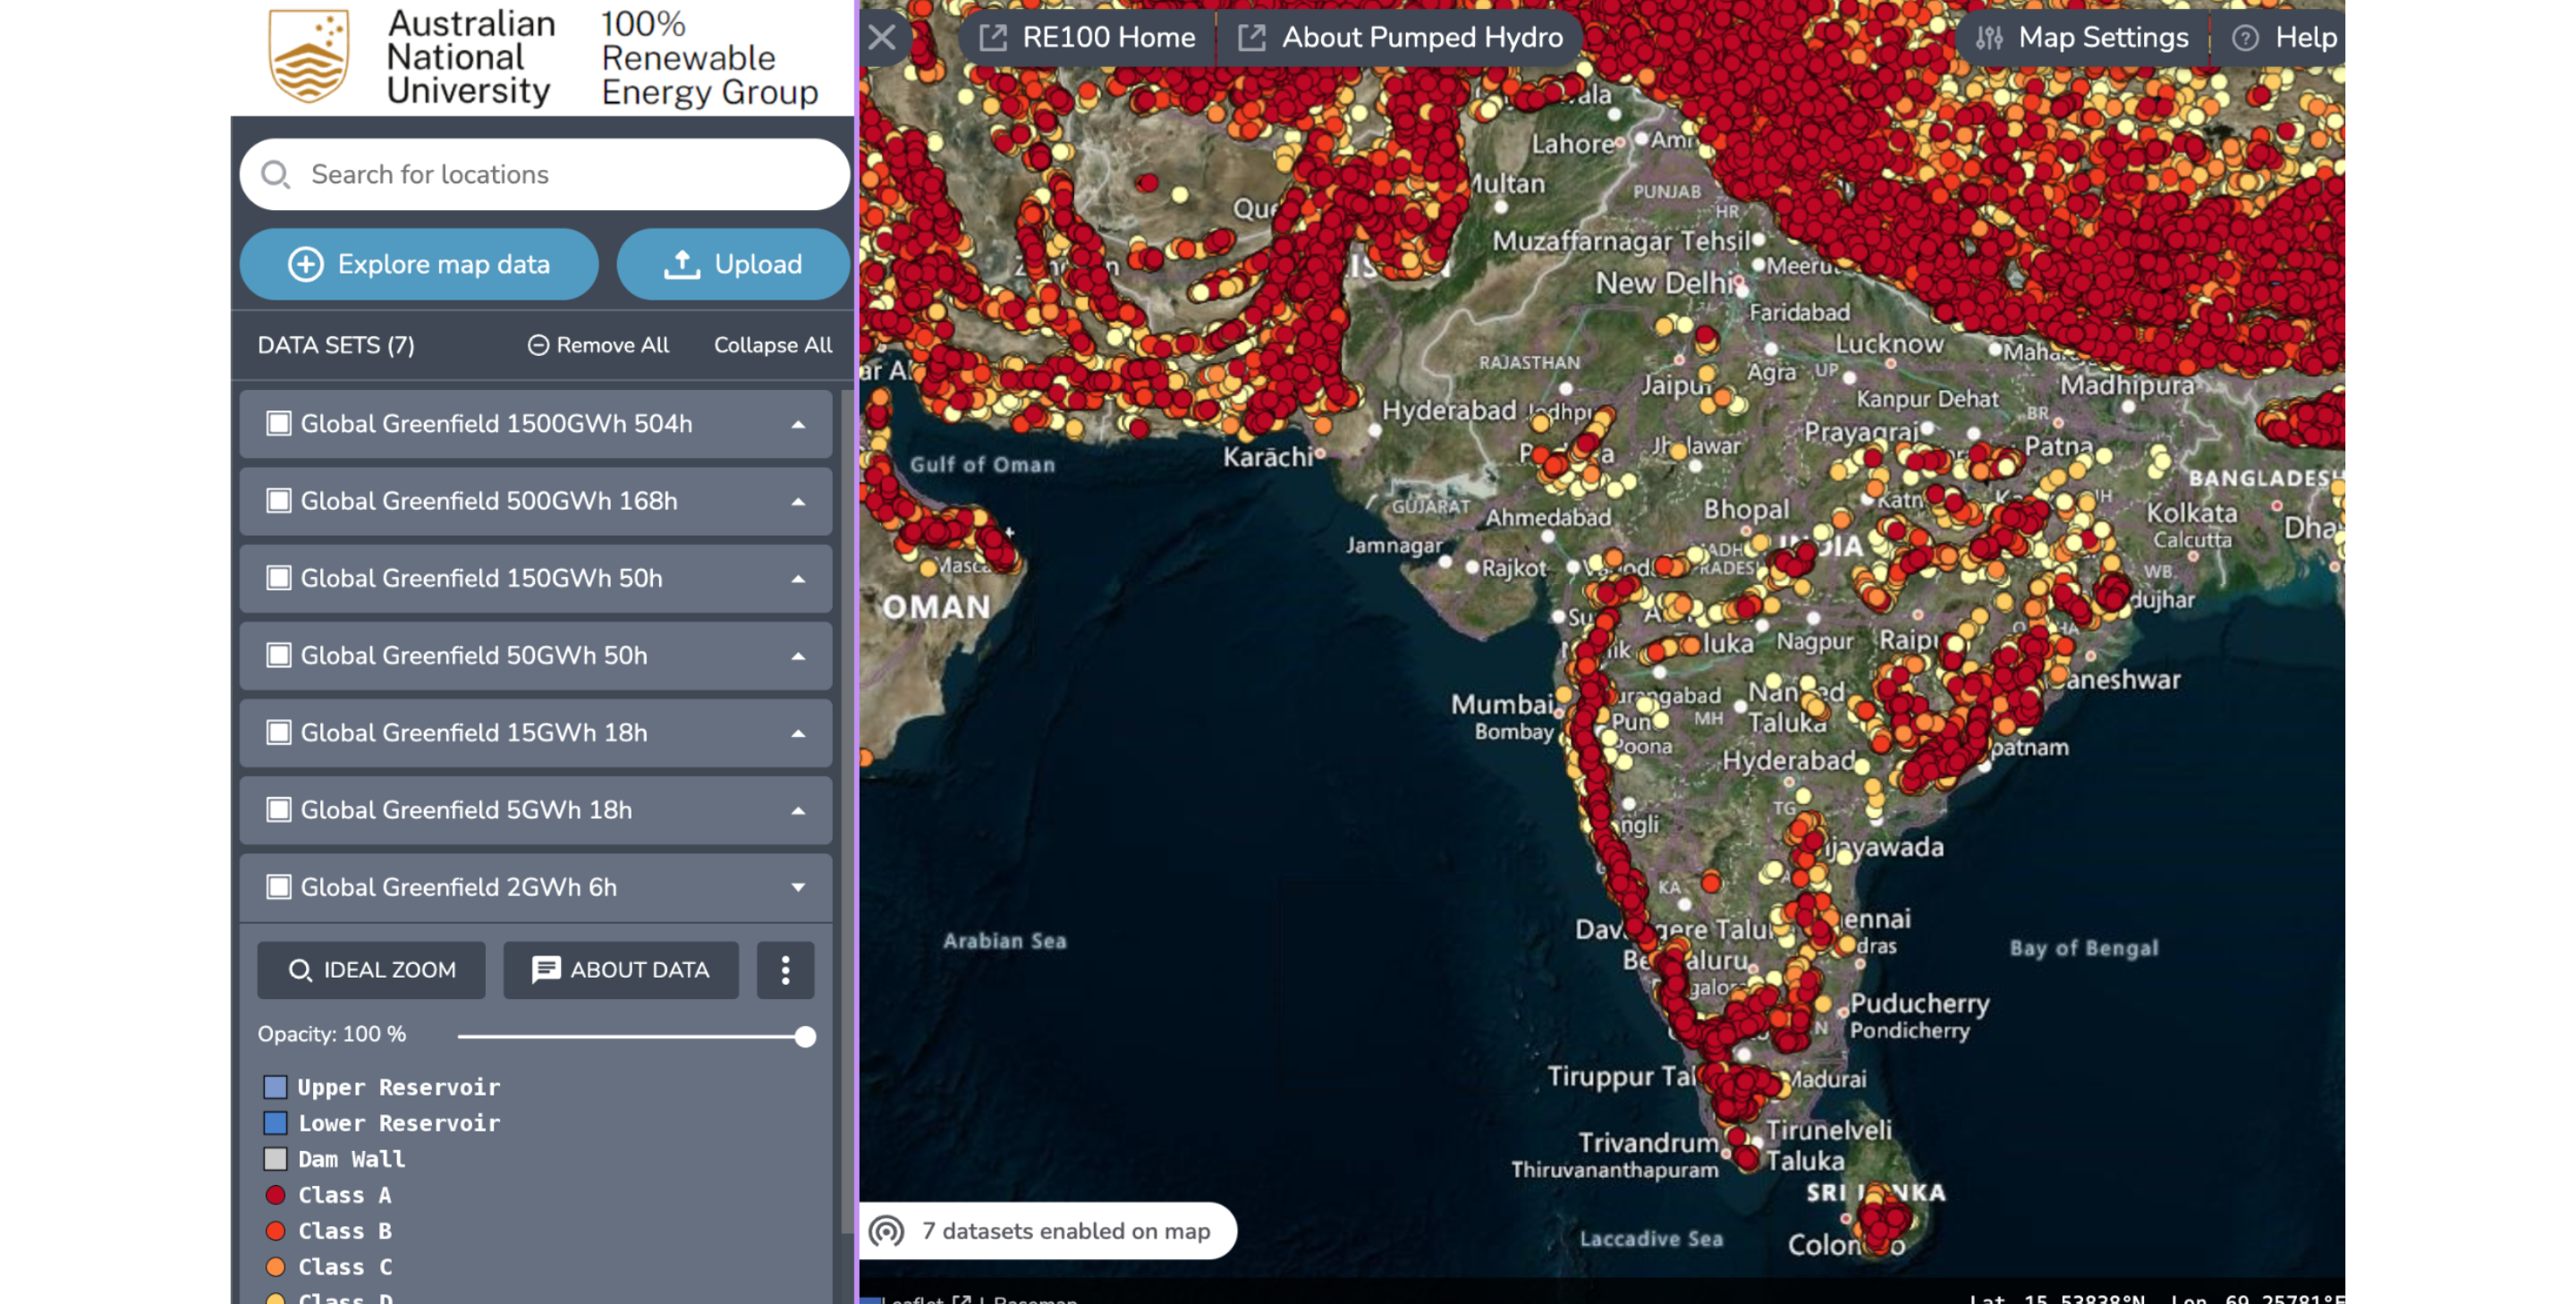 Geschlossene Pumpwasserressourcenkapazität in Indien gemäß dem globalen GIS-Greenfield-Atlas der Australia National University